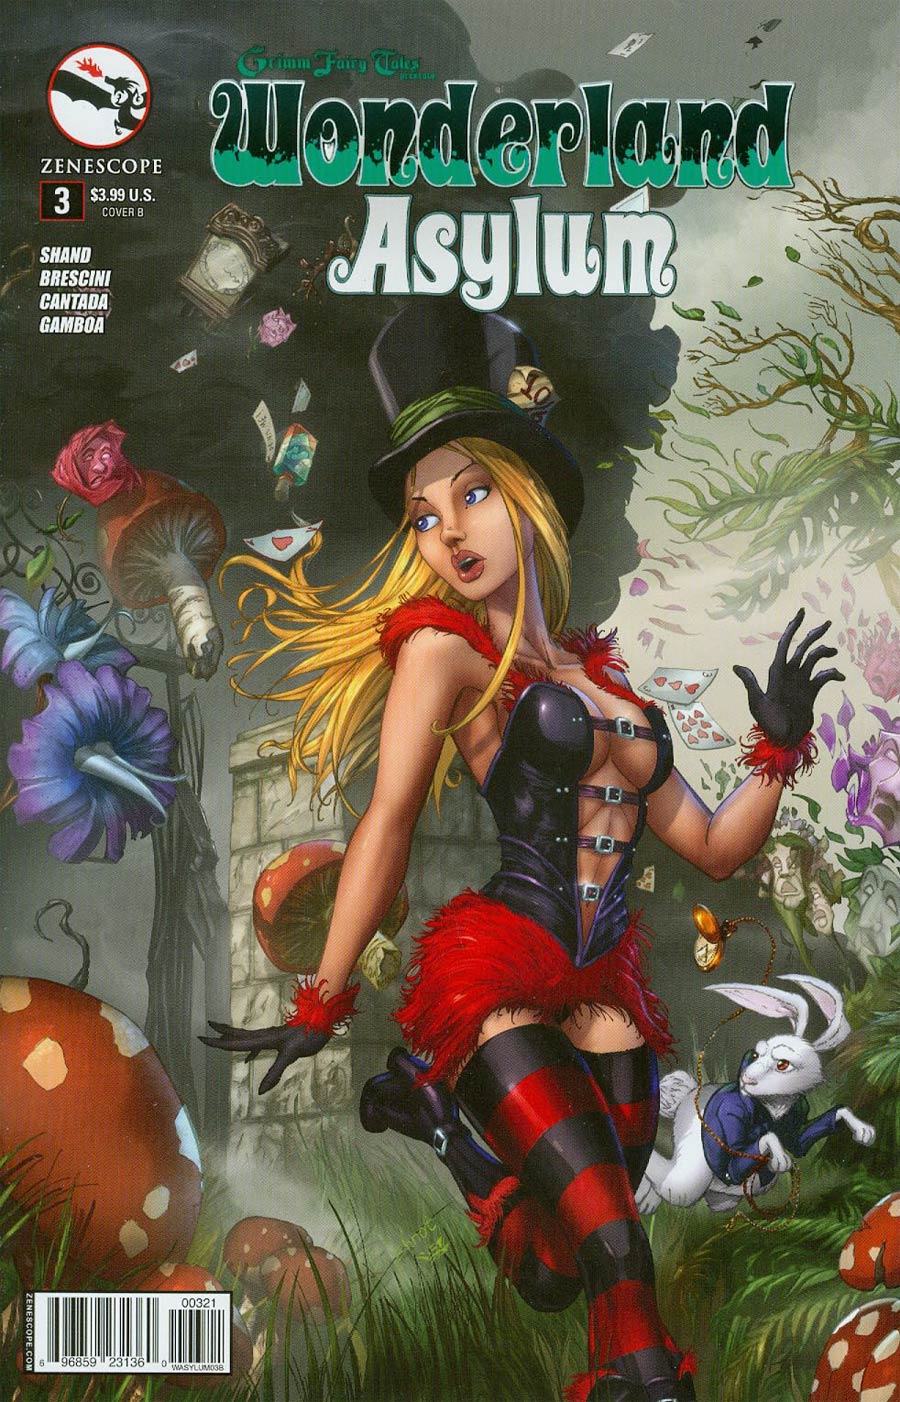 Grimm Fairy Tales Presents Wonderland Asylum #3 Cover B Chris Ehnot